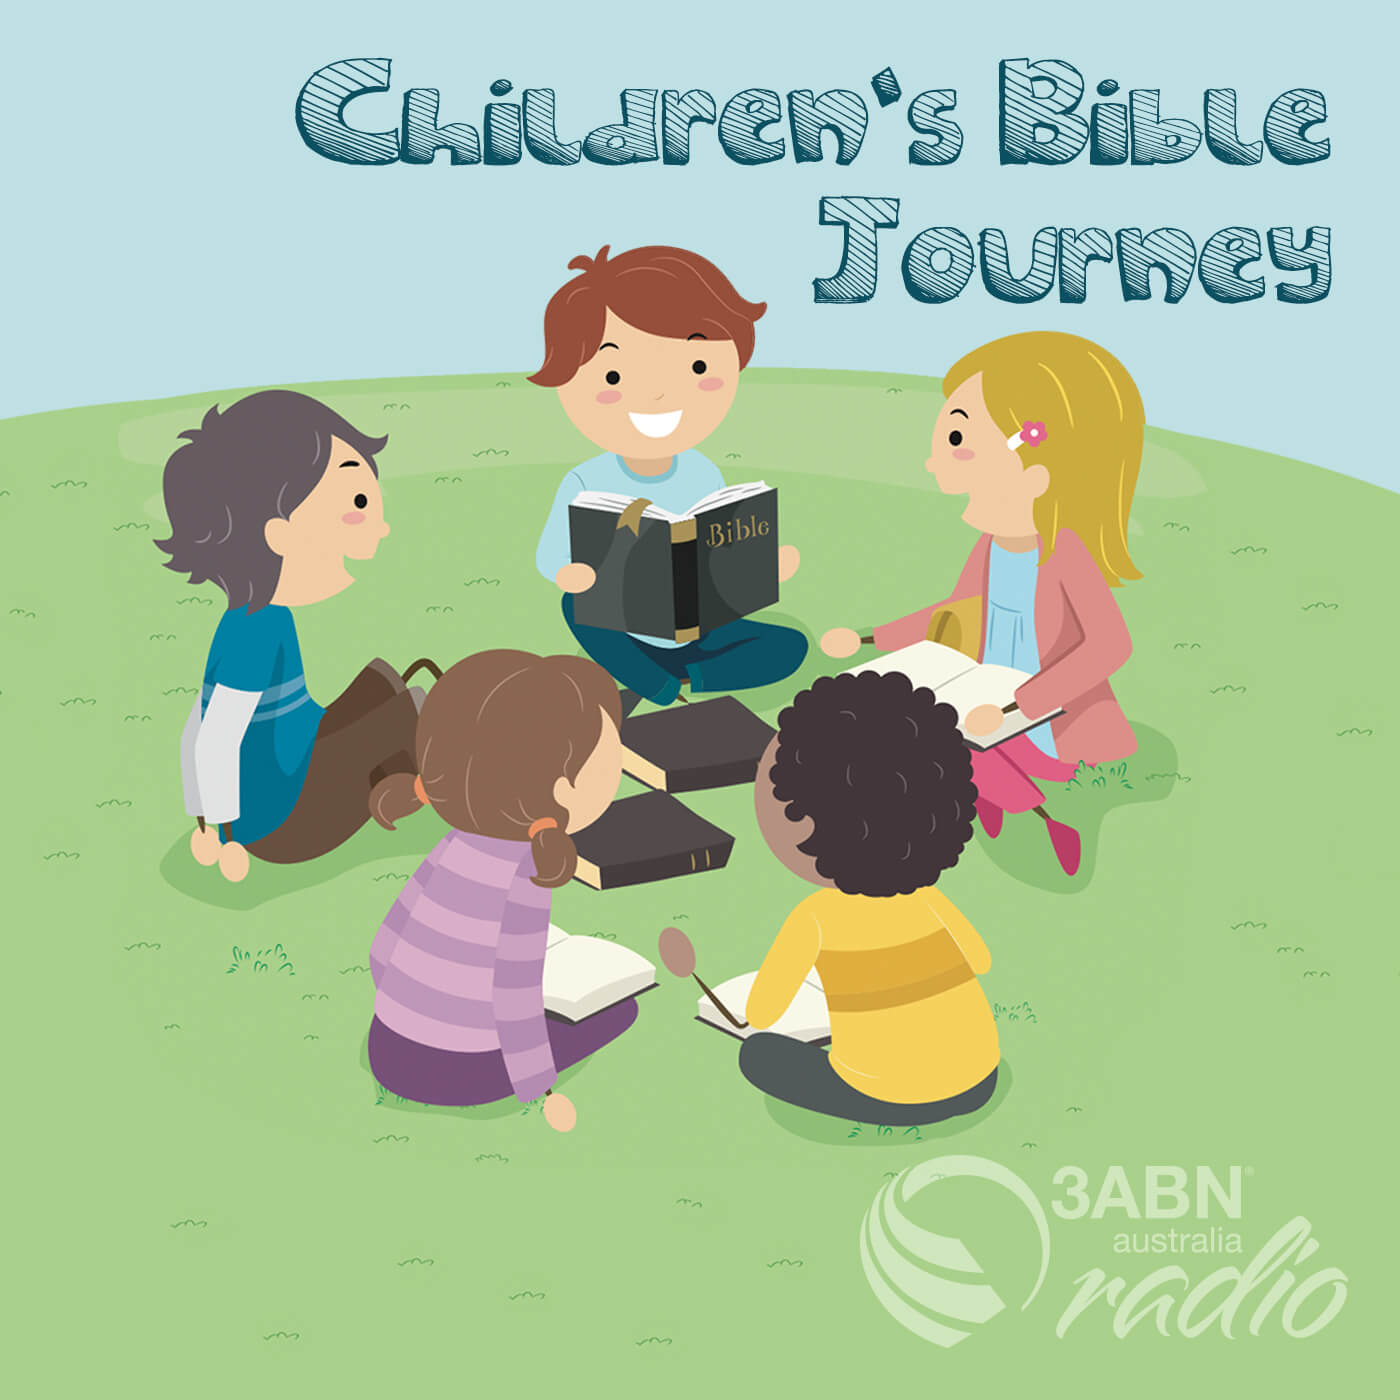 Children's Bible Journey - 2198